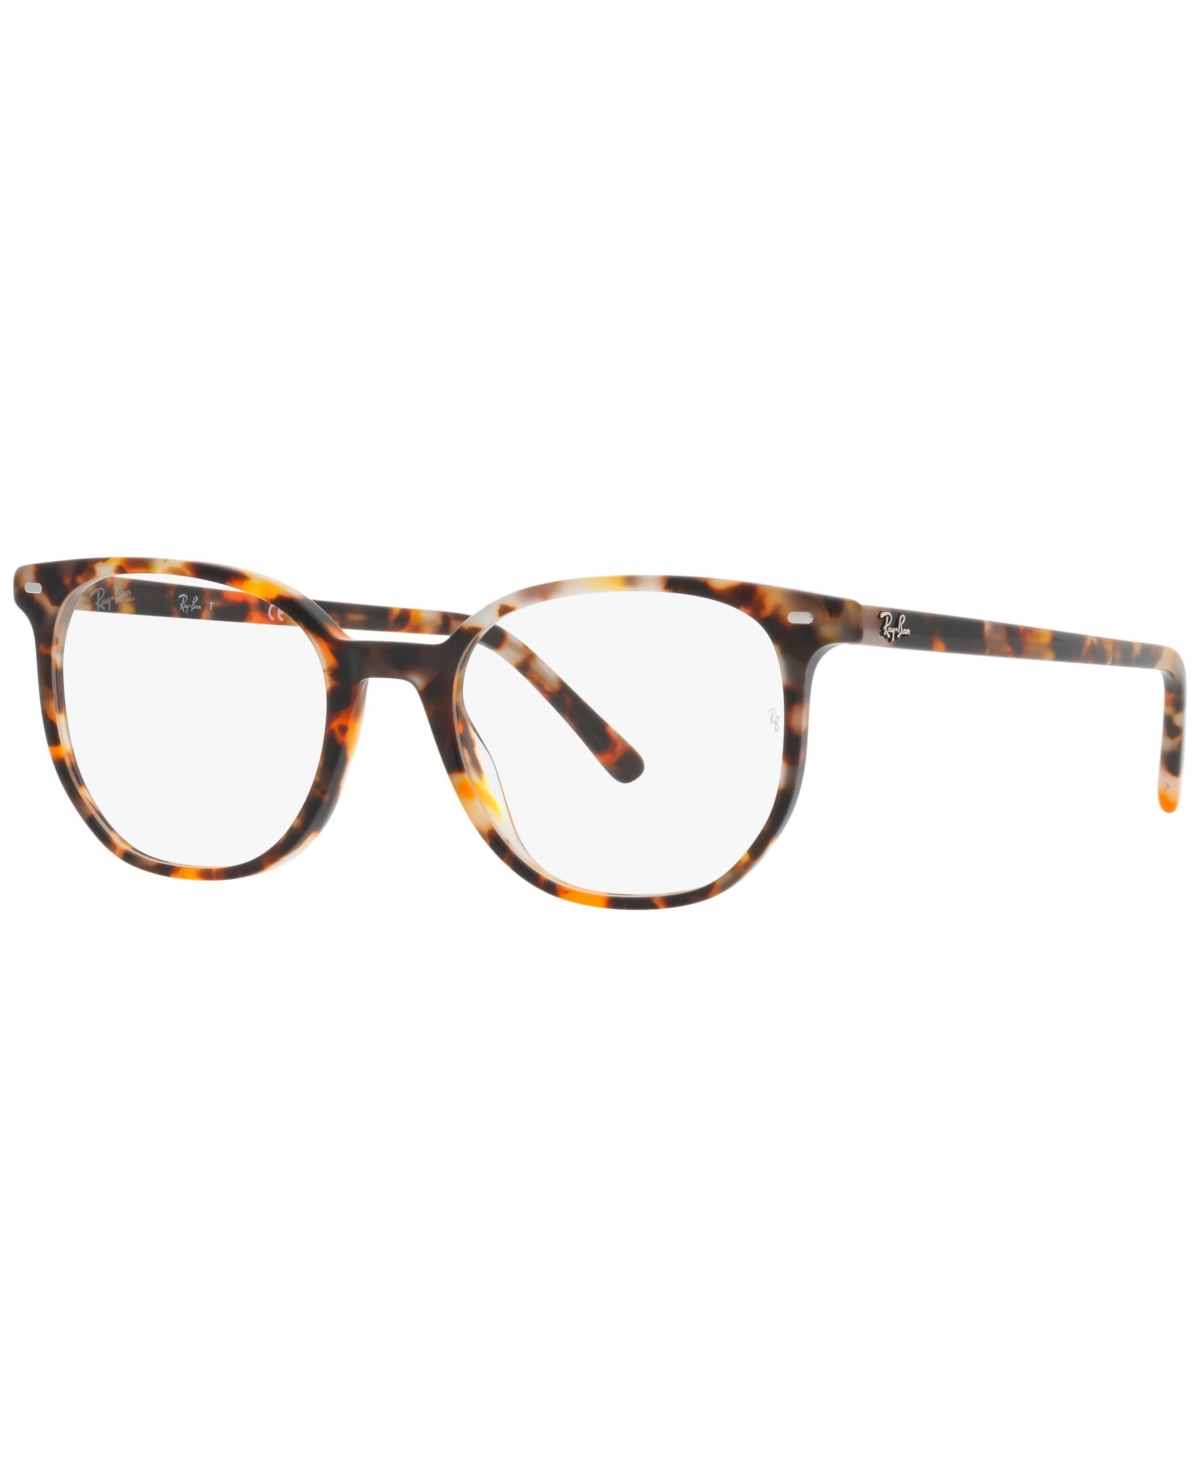 RB5397 Elliot Unisex Irregular Eyeglasses - Brown and Gray Havana